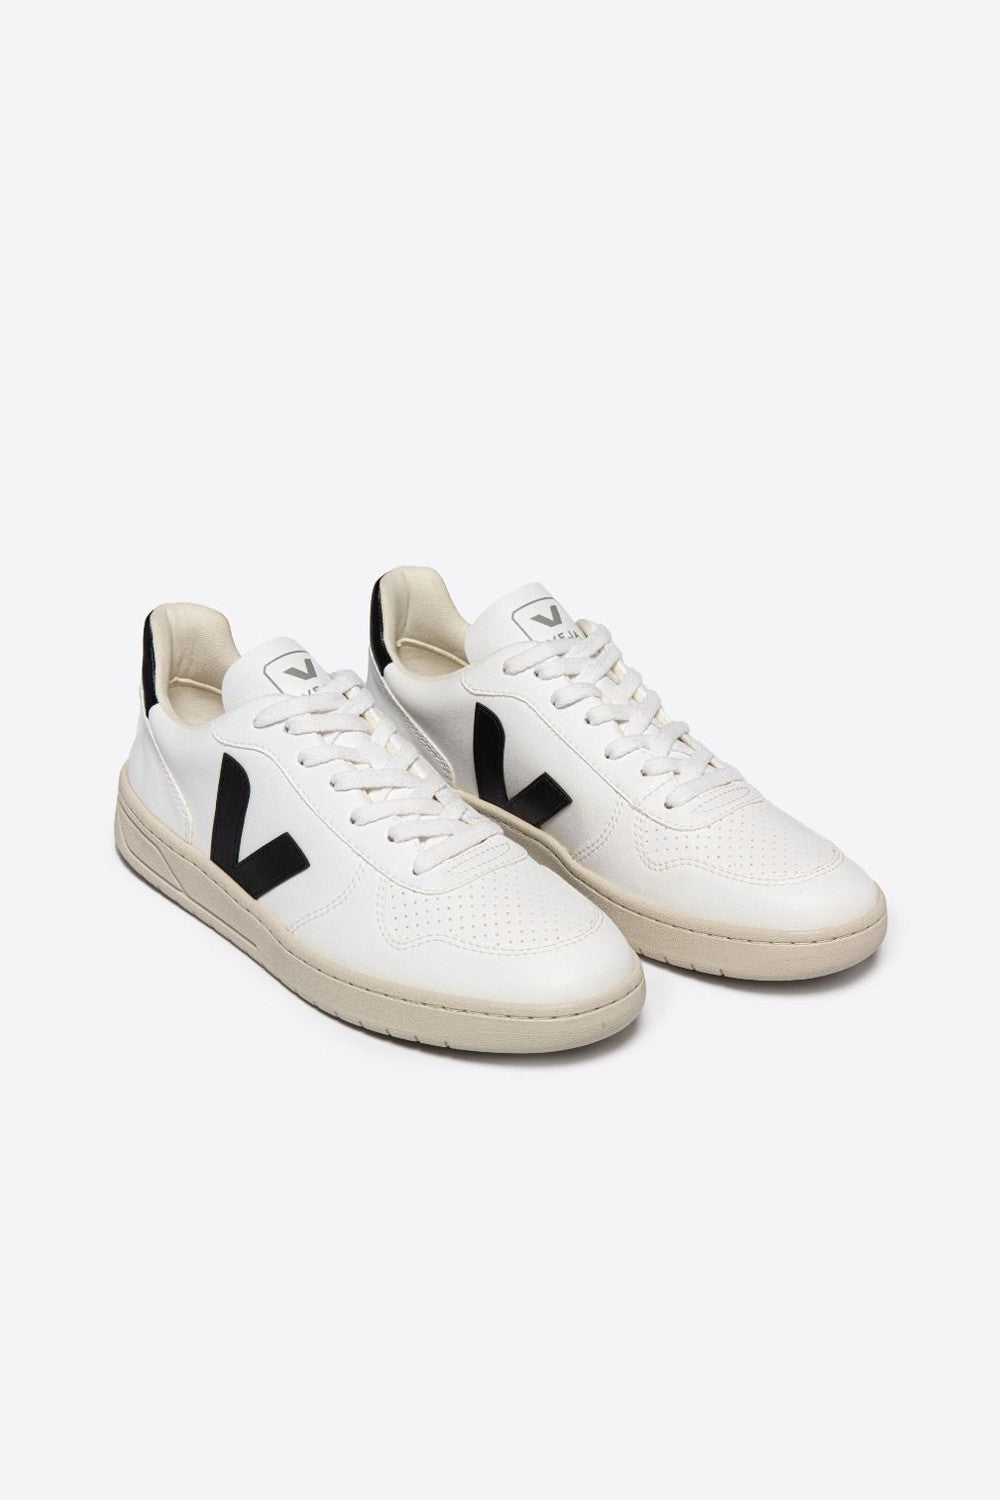 V 10 CWL White Black Leather Sneakers